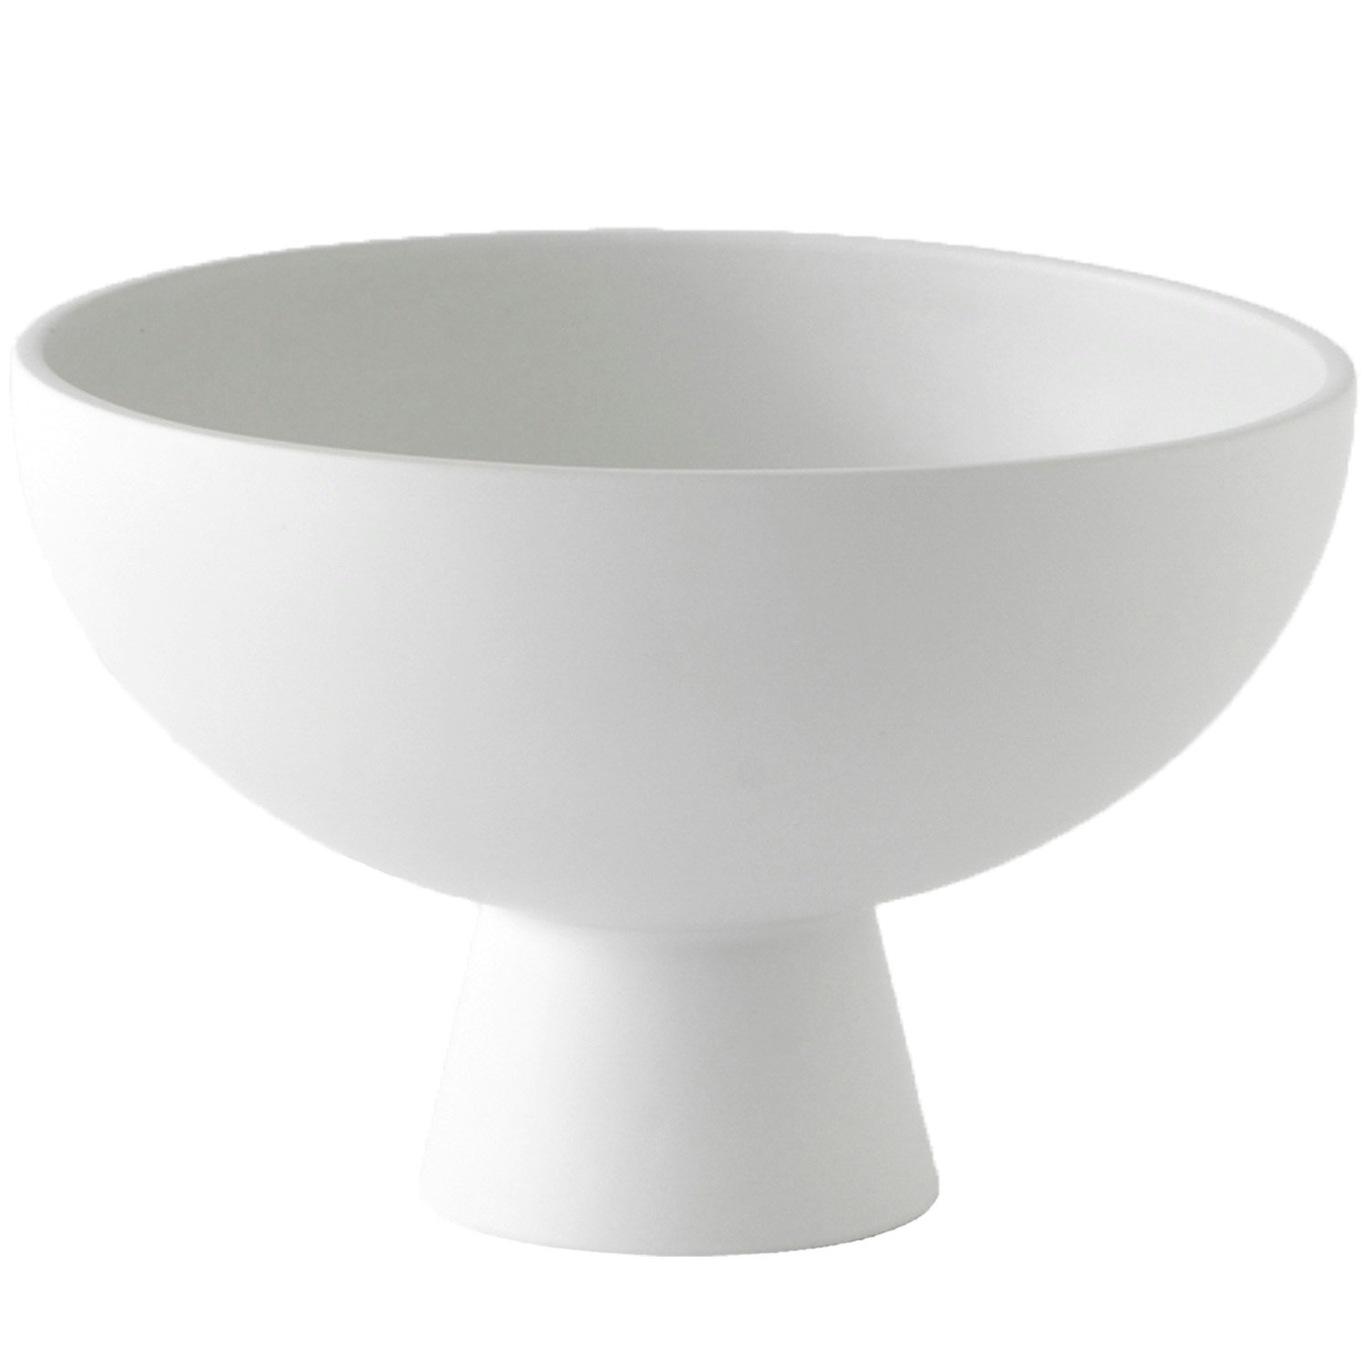 Strøm Bowl With Foot Ø22 cm, Vaporous Grey